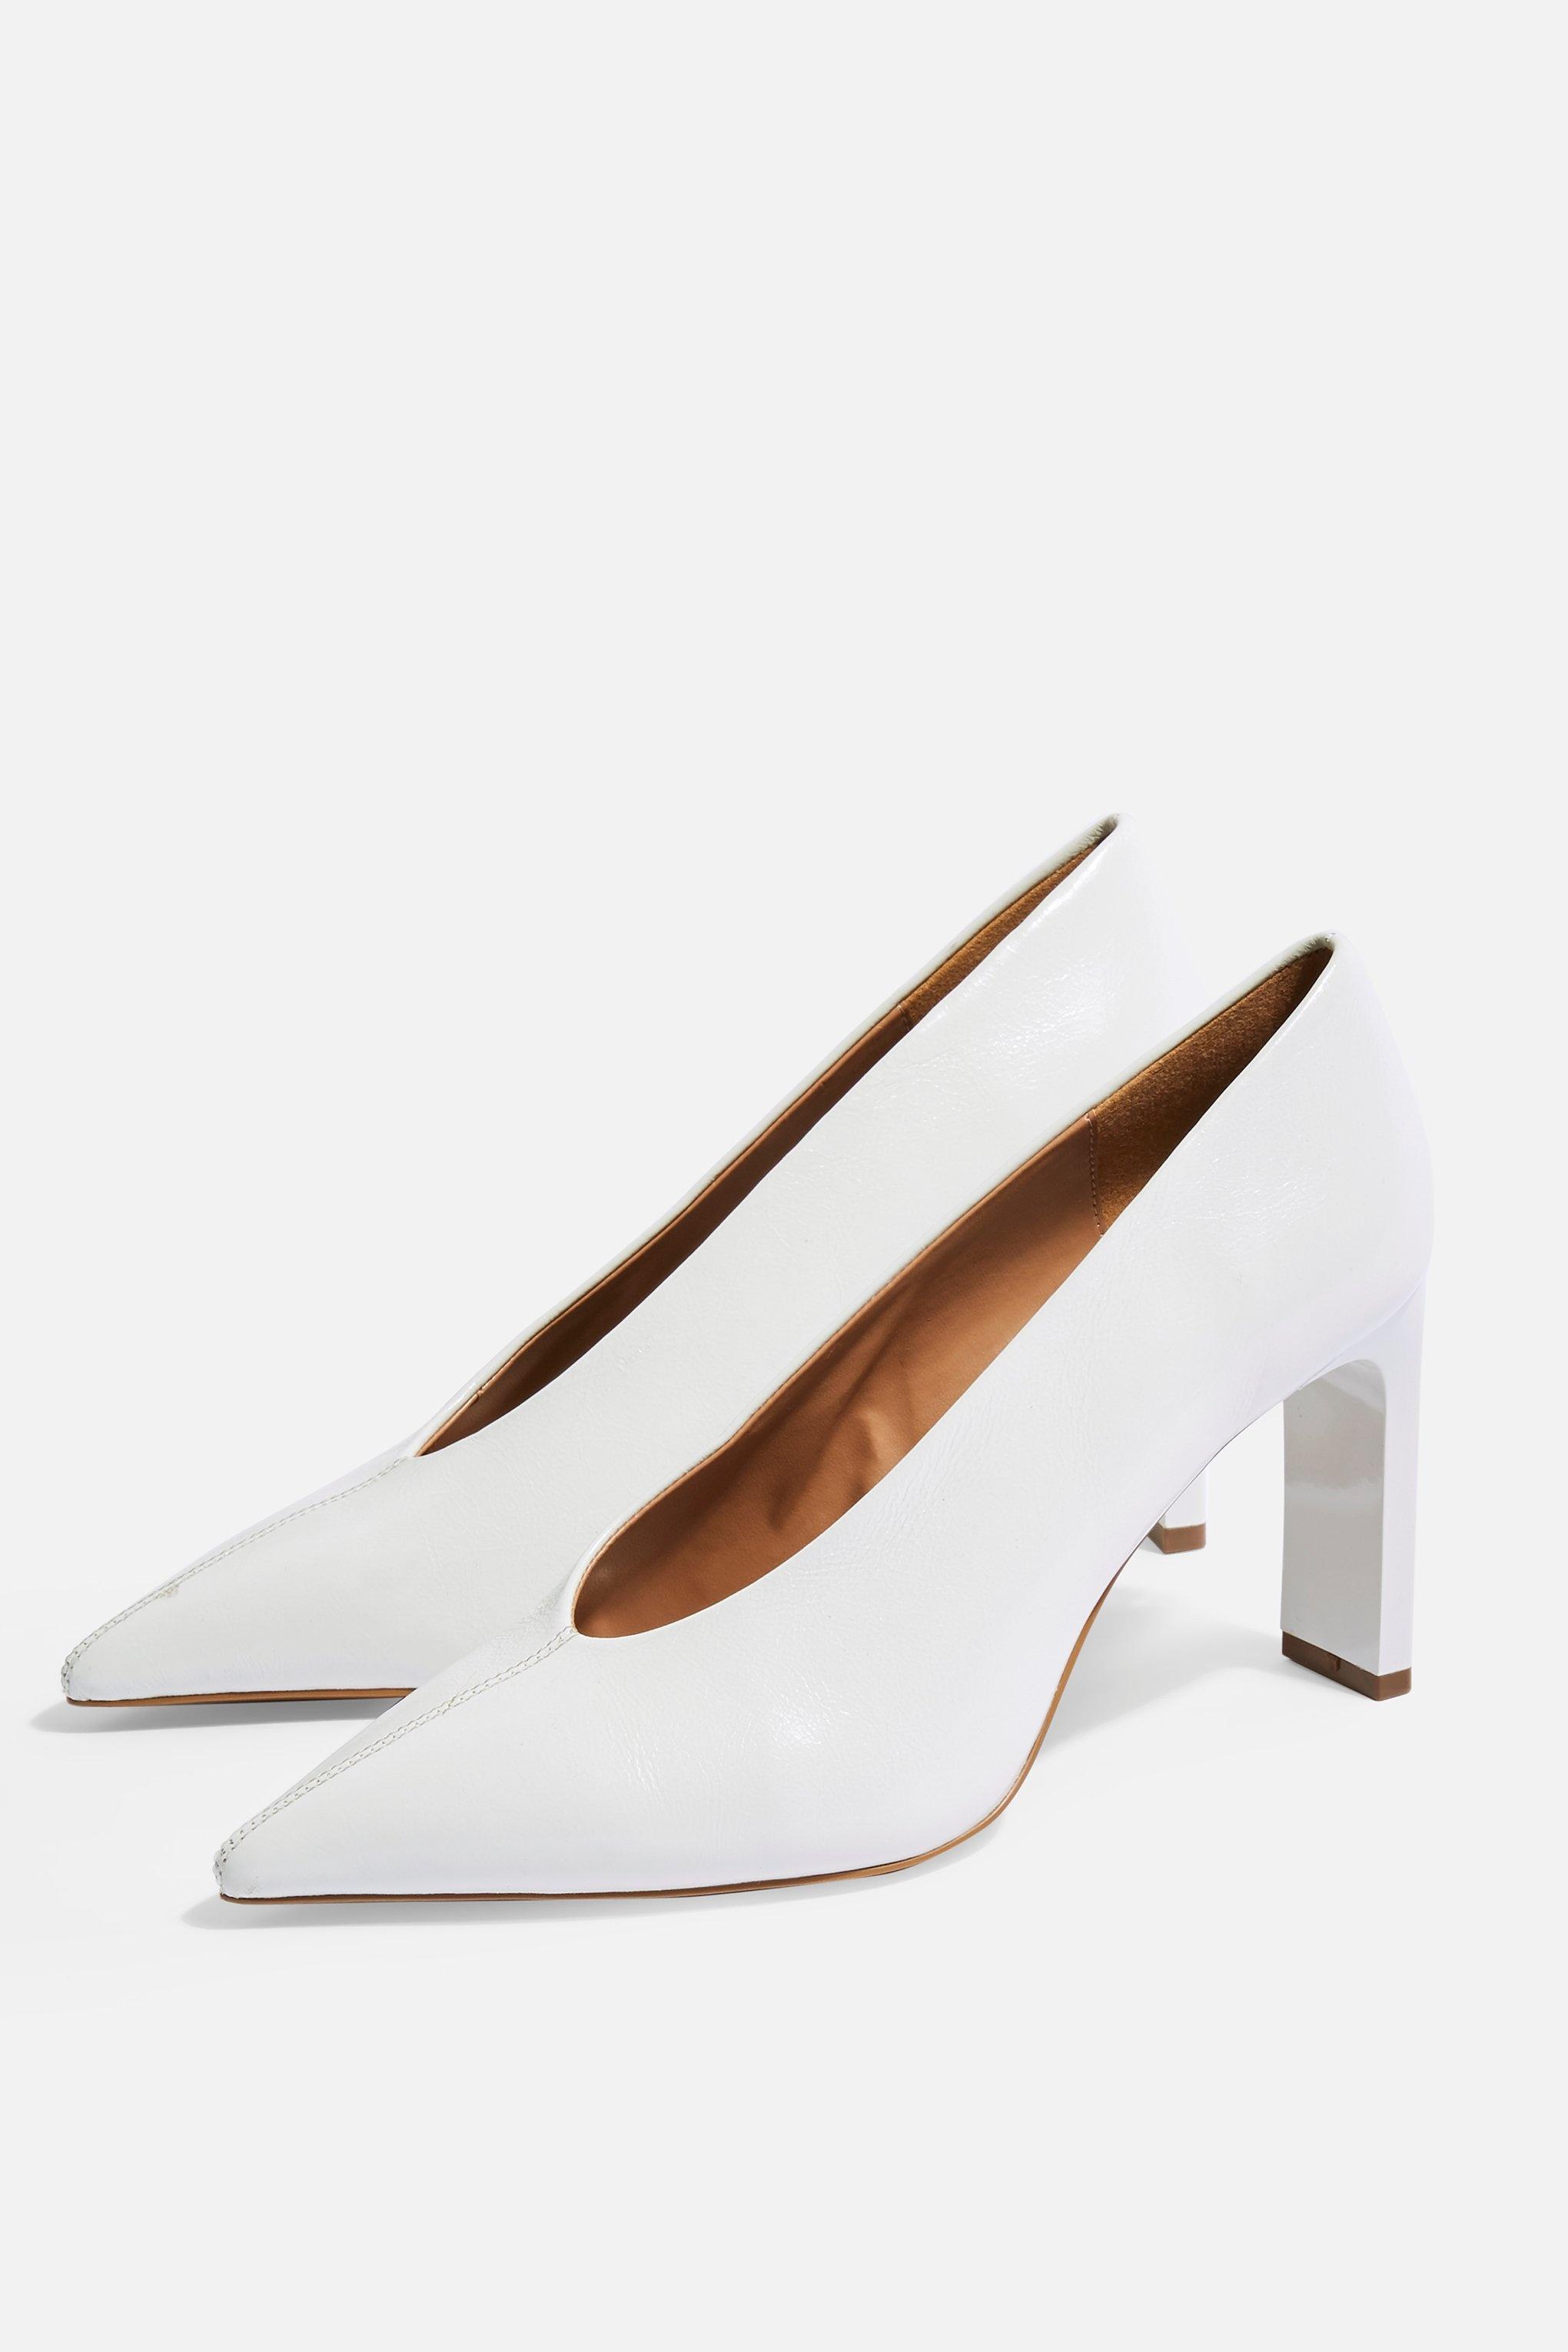 nico white set back heels